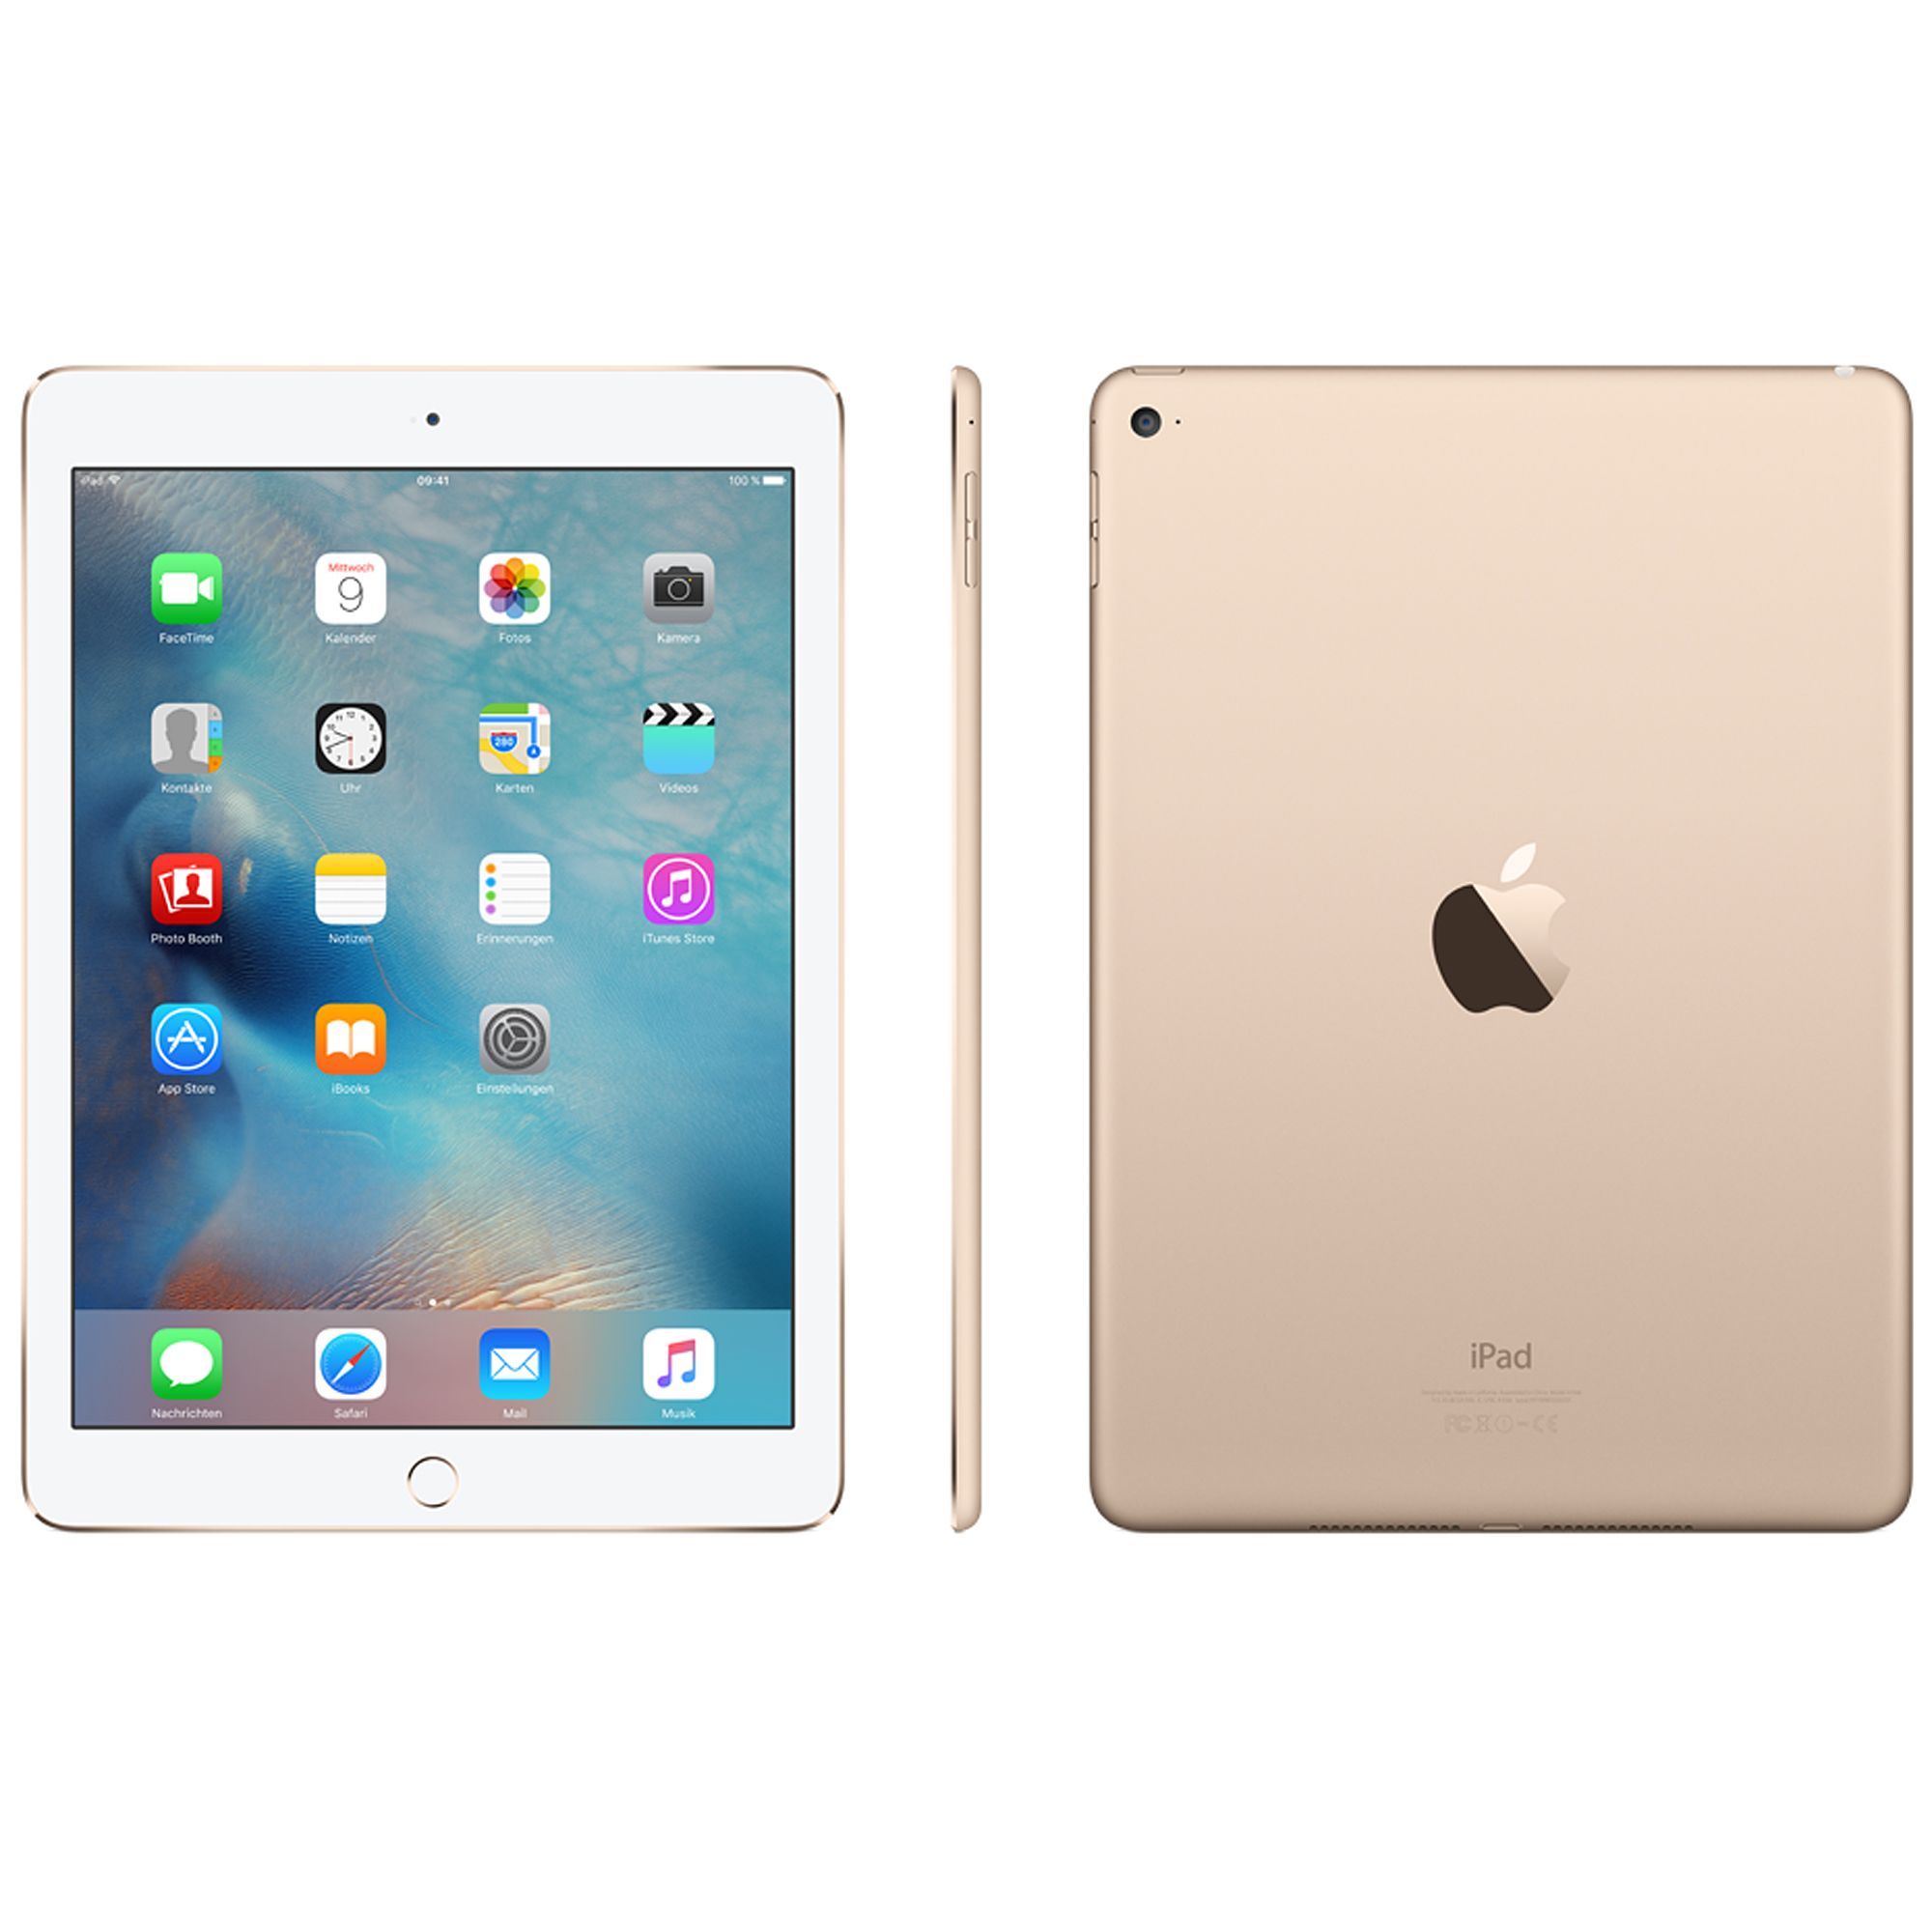 Apple iPad Air 2 A1566 - 64GB WiFi Space Grey Refurbished | Apple iPads ...